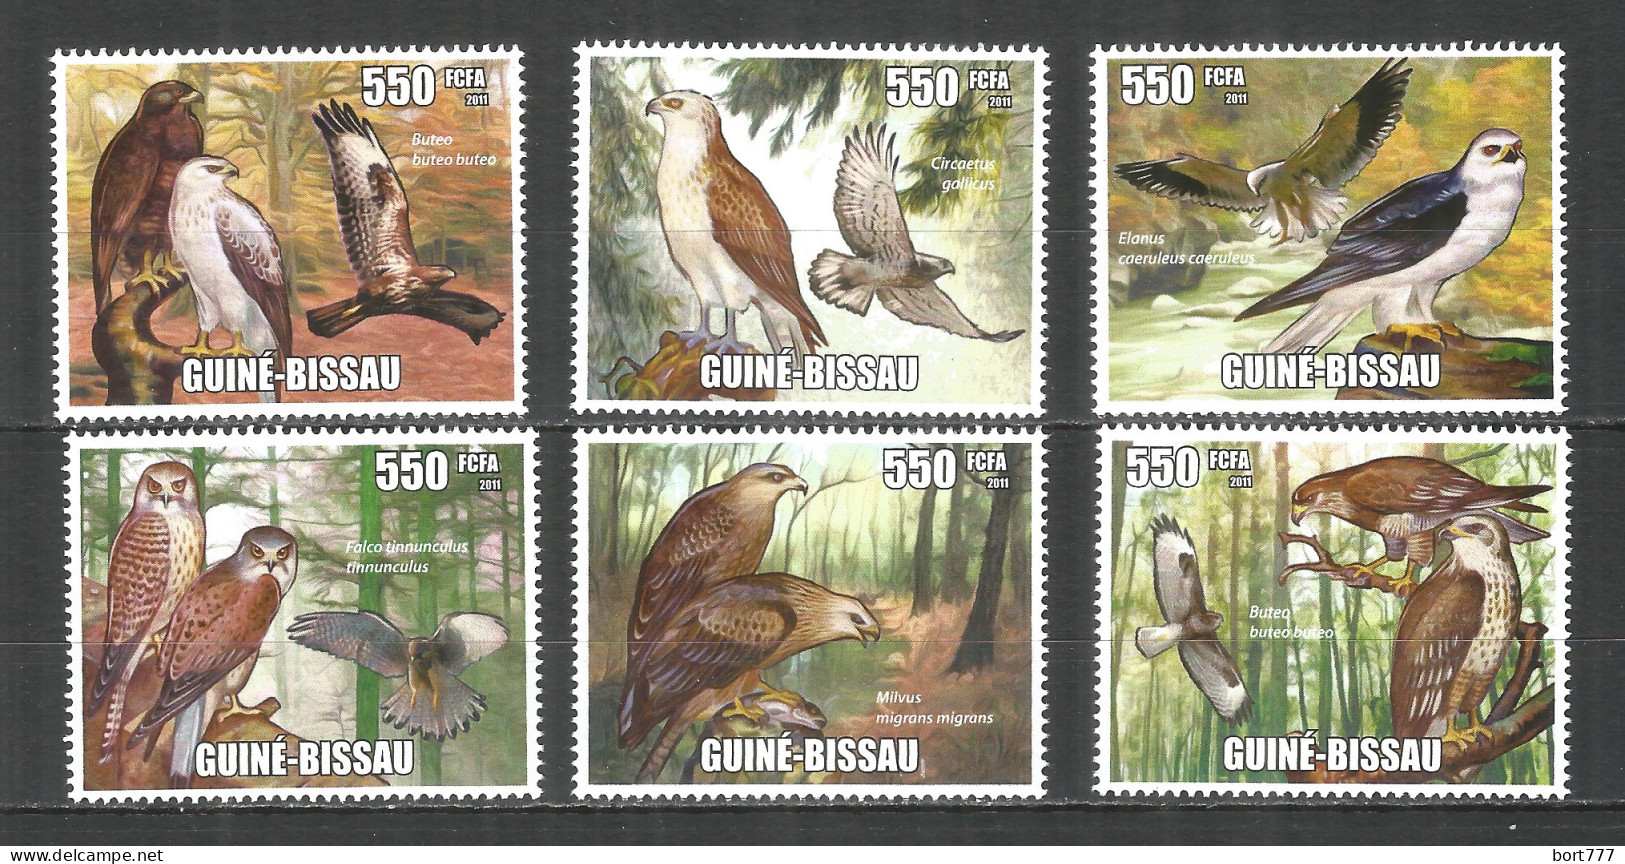 Guinea-Bissau 2011 Mint Stamps MNH(**) Raptors (Birds) - Guinea-Bissau